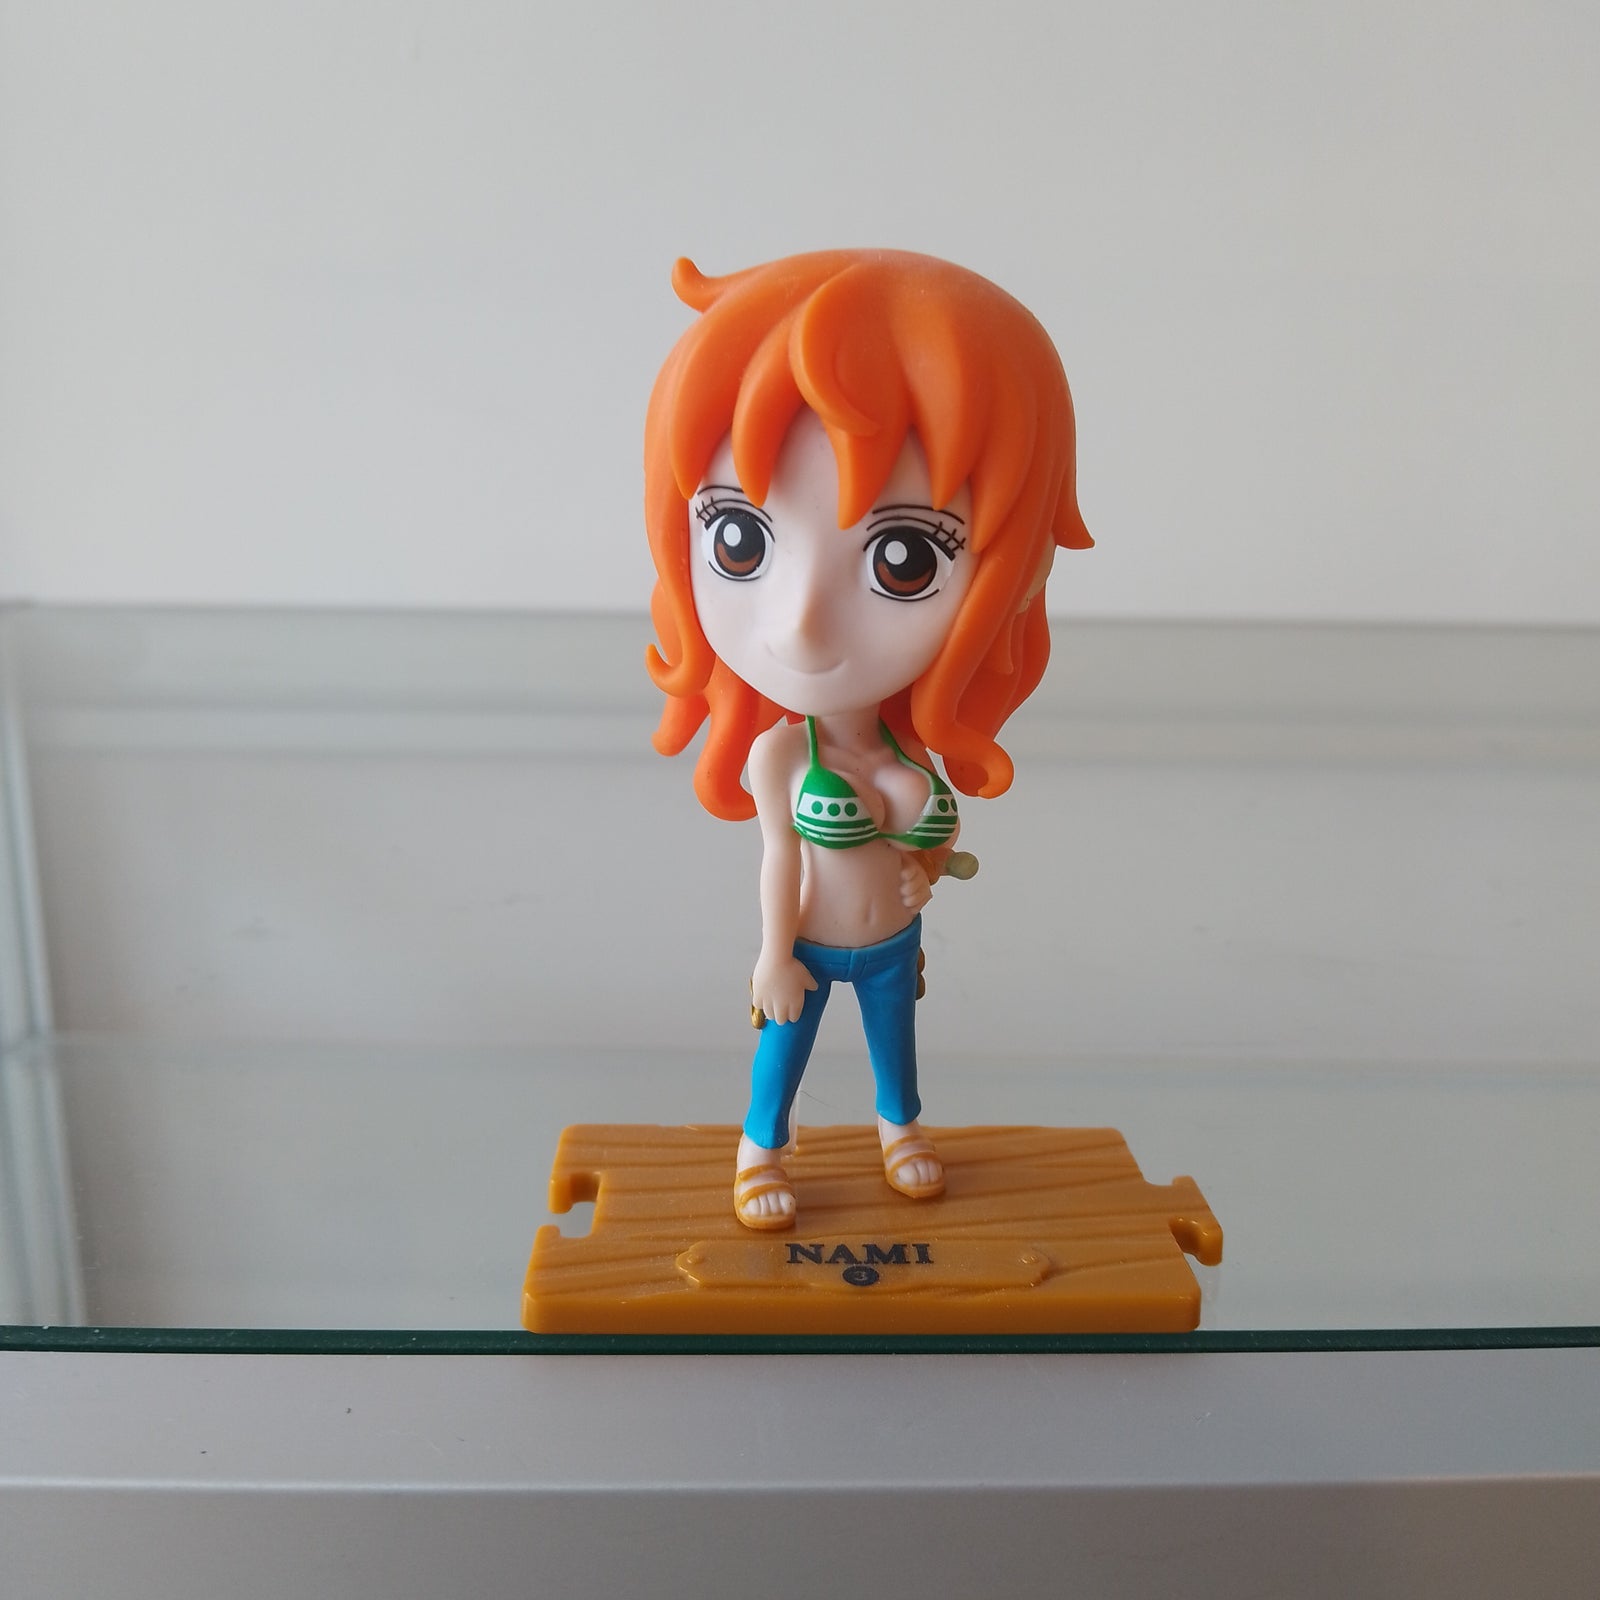 Nami - One Piece Toy Figure